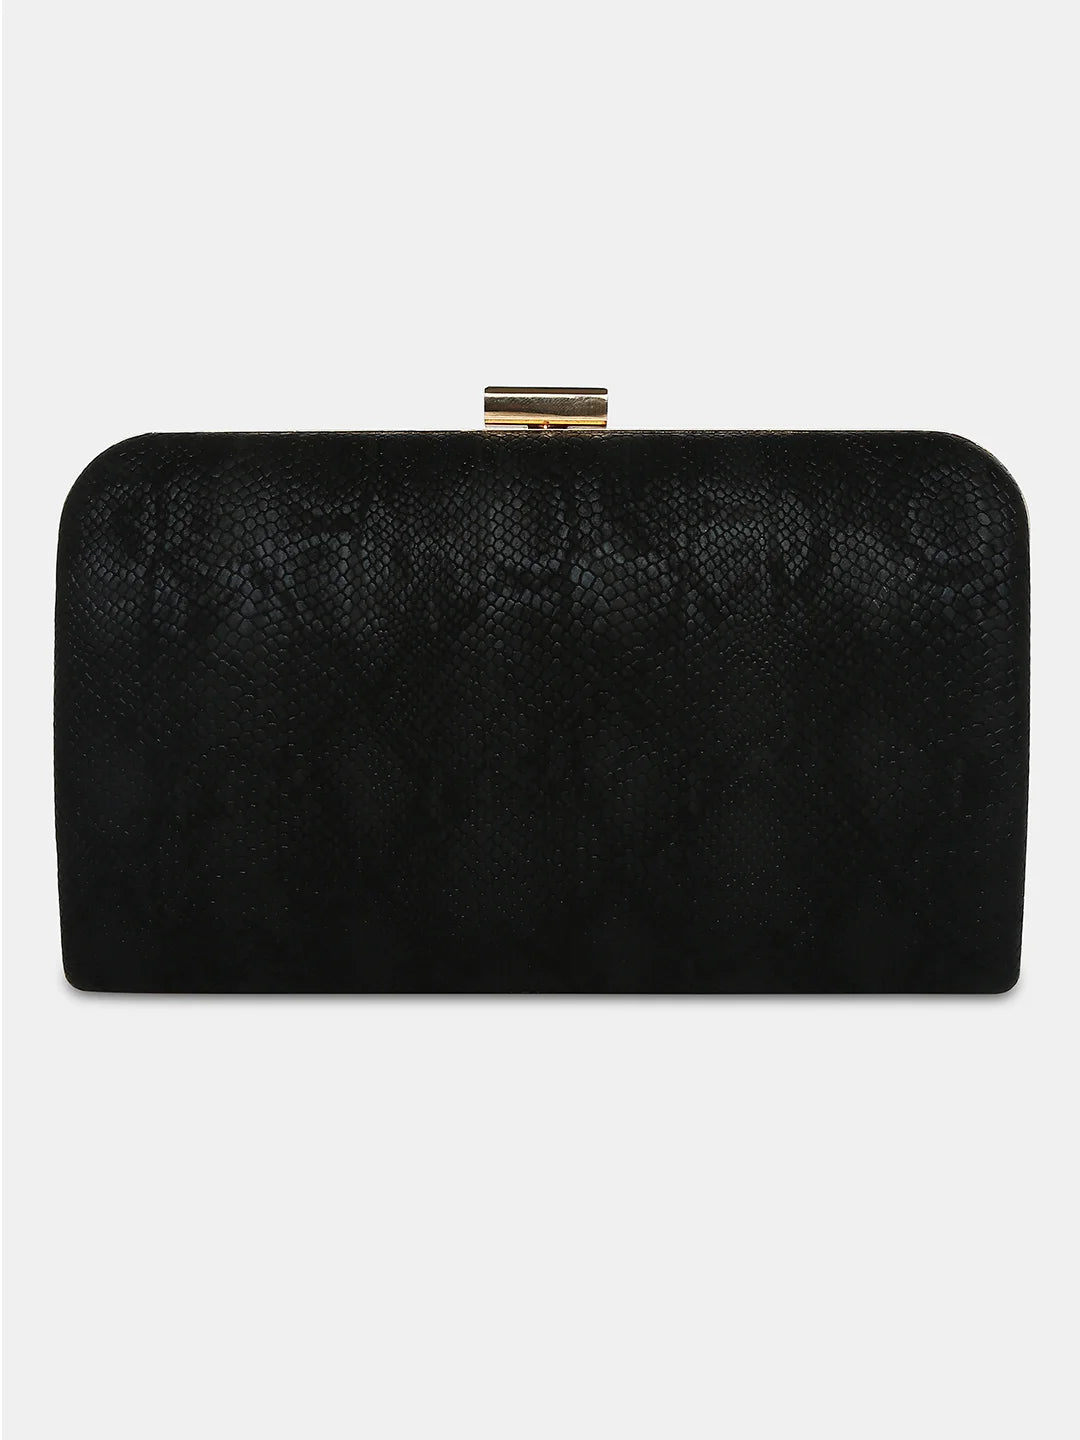 Black Box Clutch Bag With Black 3D Rosettes: Women's Luxury Handbags | Anne  Fontaine